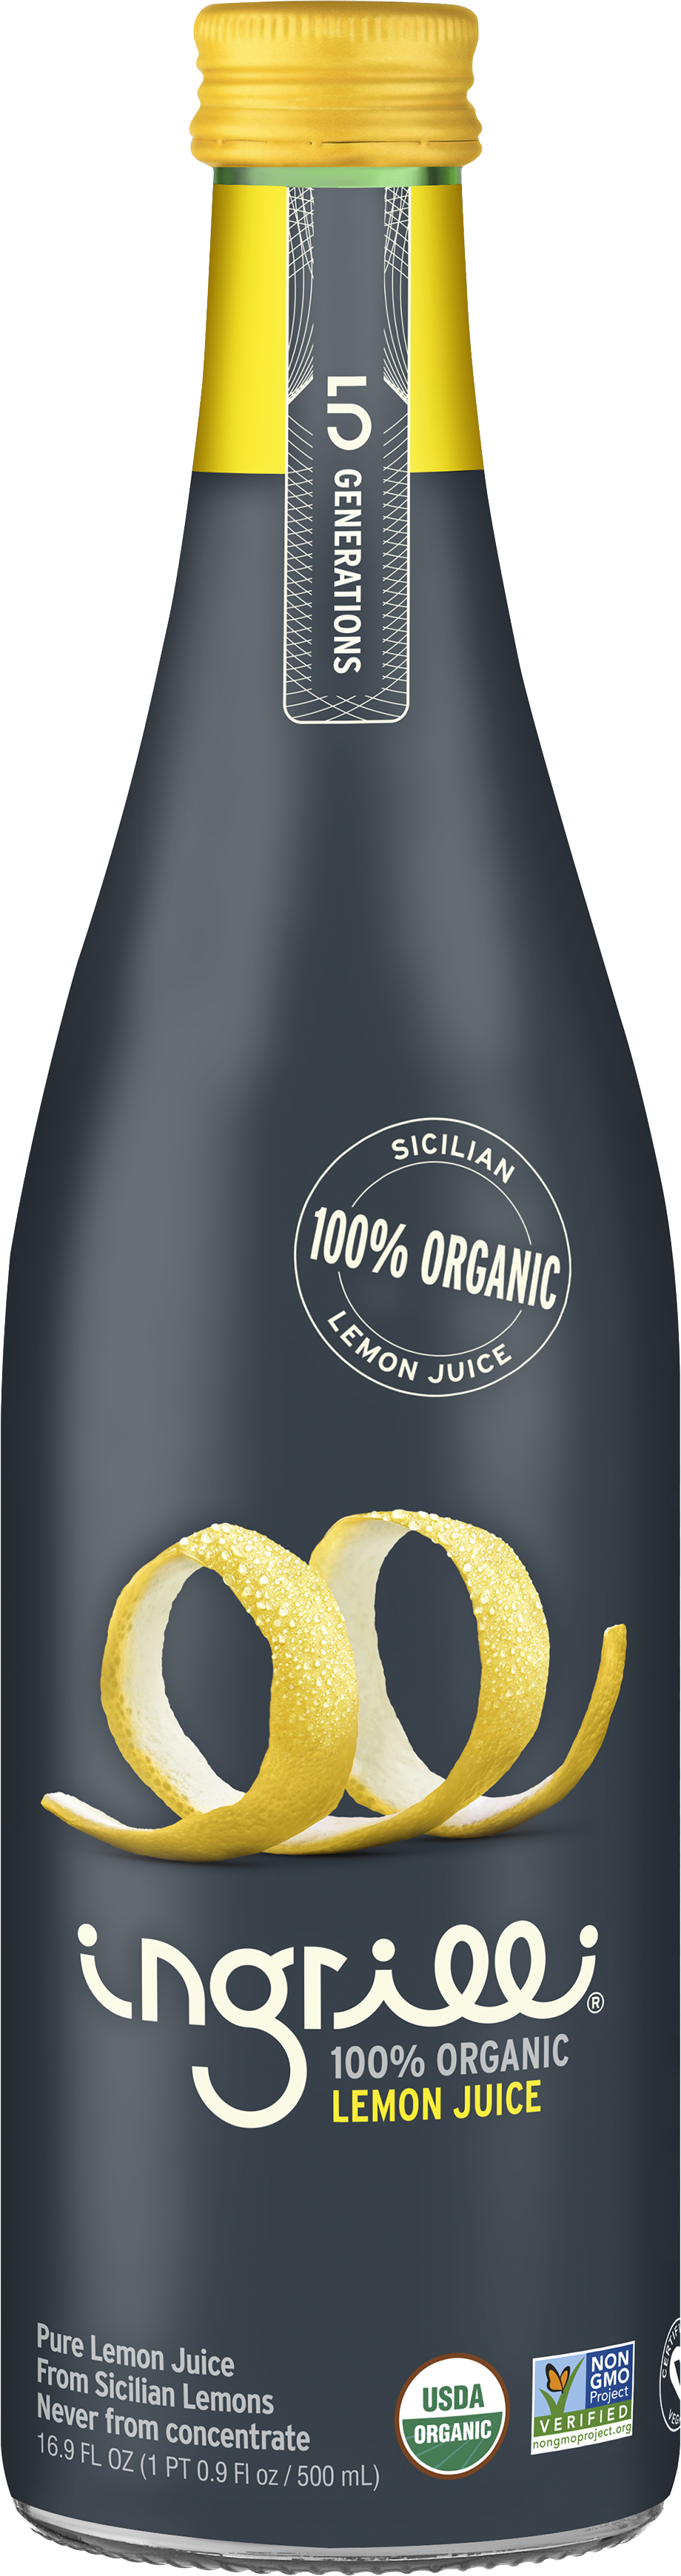 Ingrilli 100% Organic Lemon Juice, 16.9 Fl Oz Glass Bottle - Multi Pack